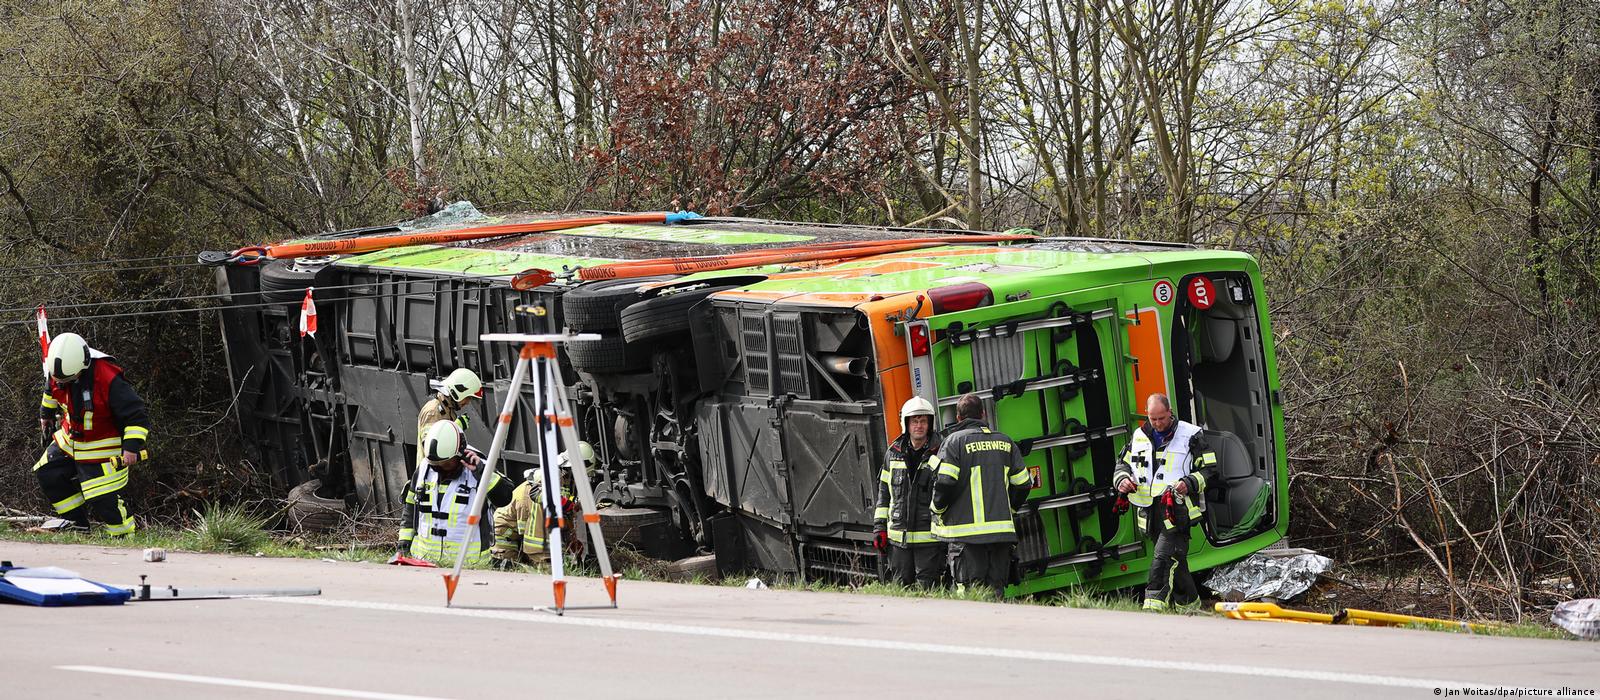 Accidente de bus en autopista de Alemania deja como saldo cinco fallecidos